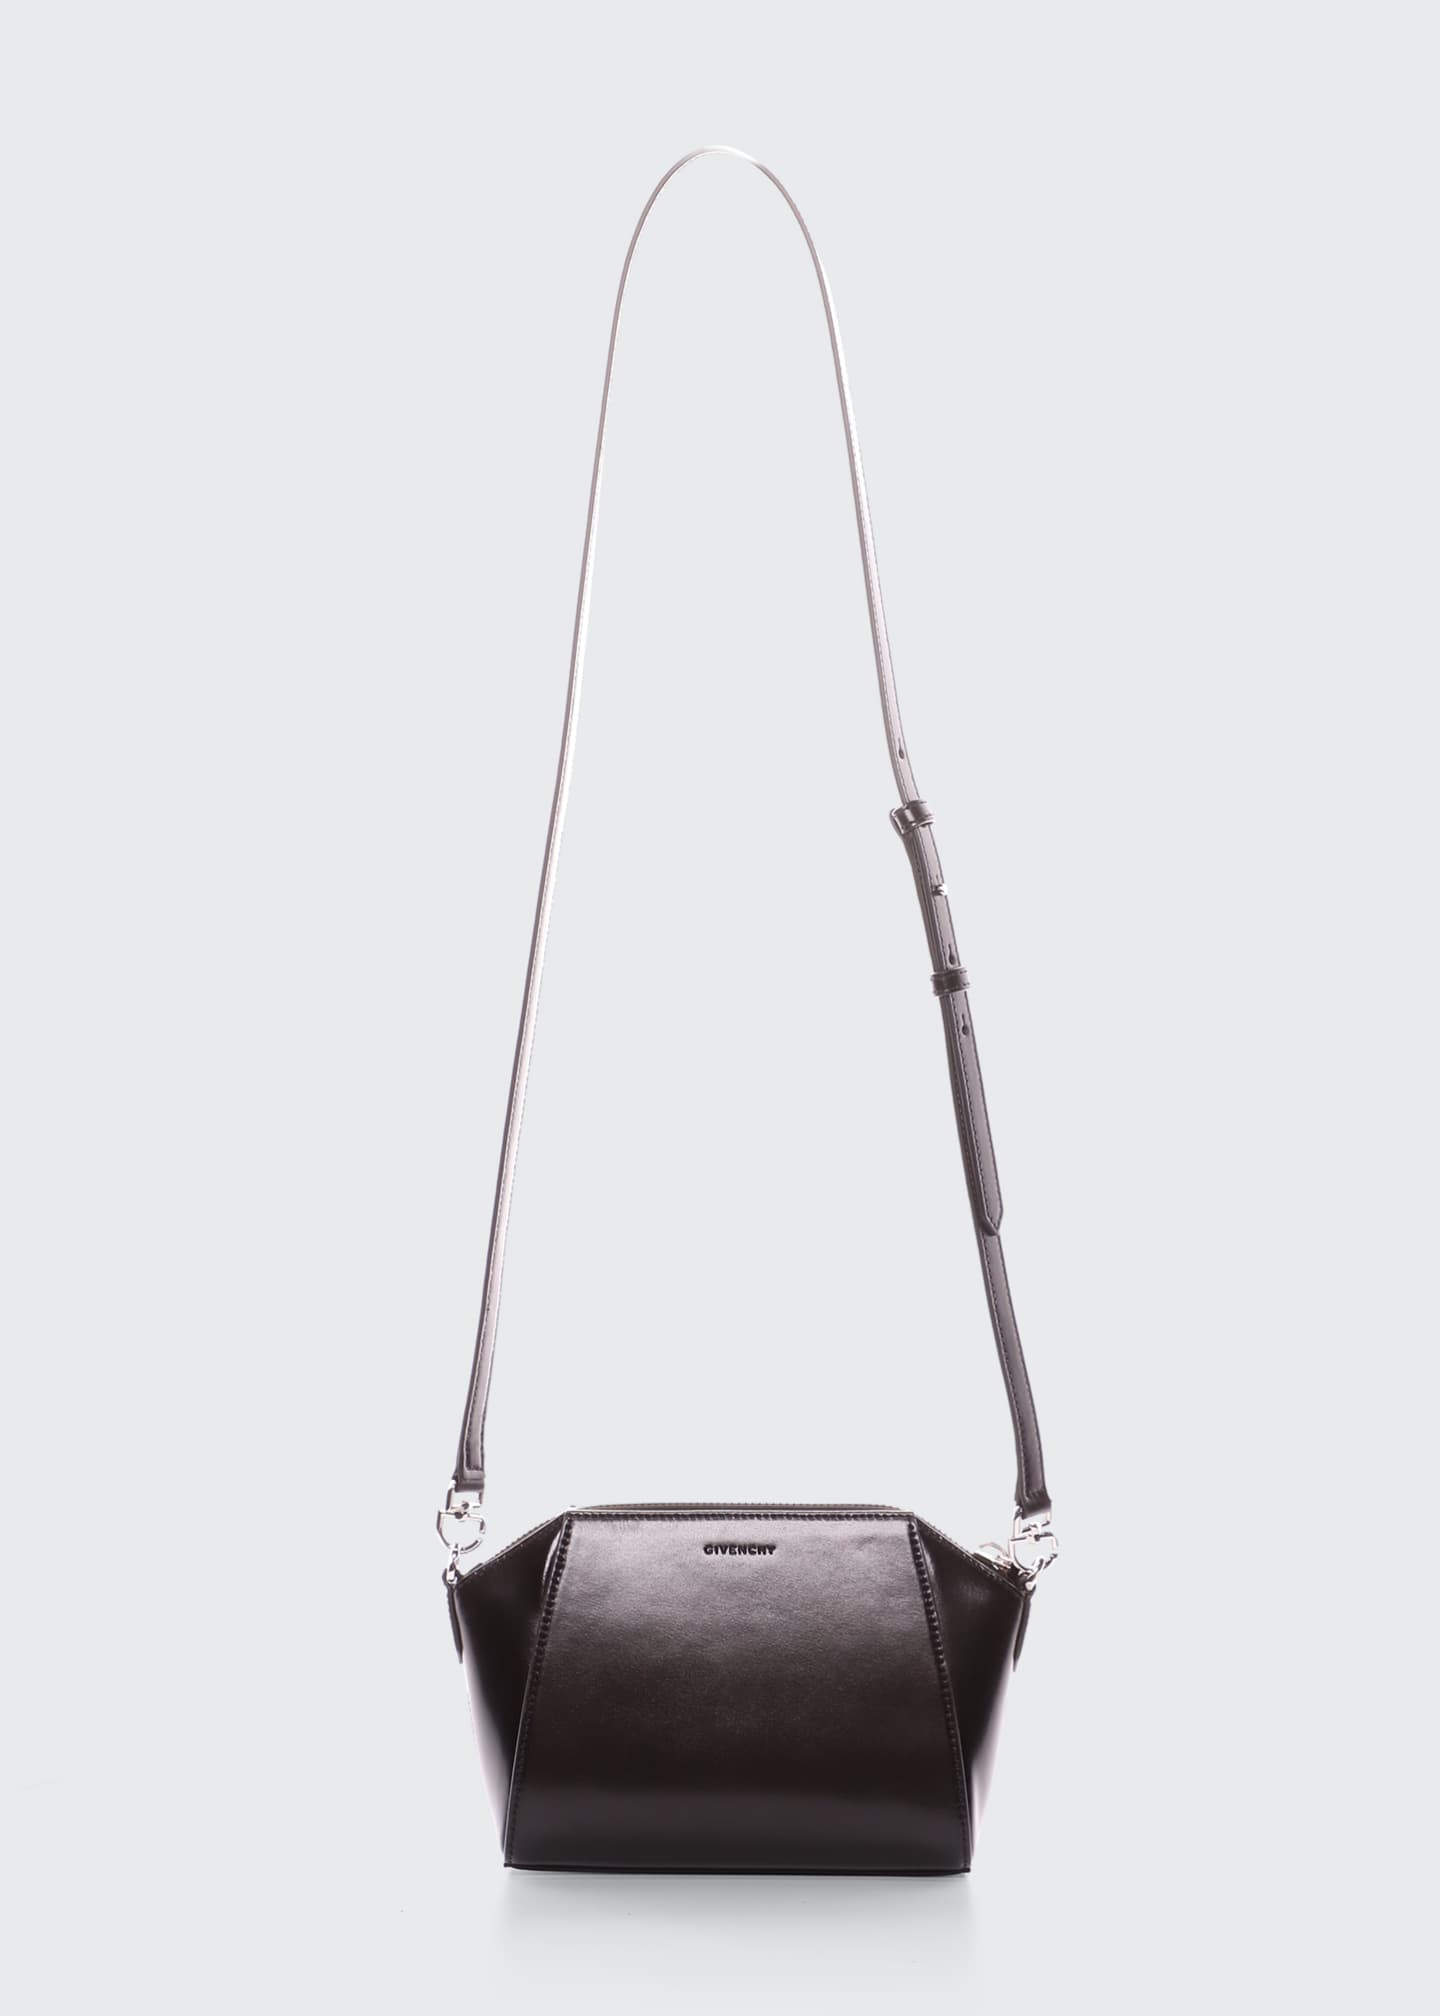 Givenchy Antigona XS Box Leather Shoulder Bag - Bergdorf Goodman